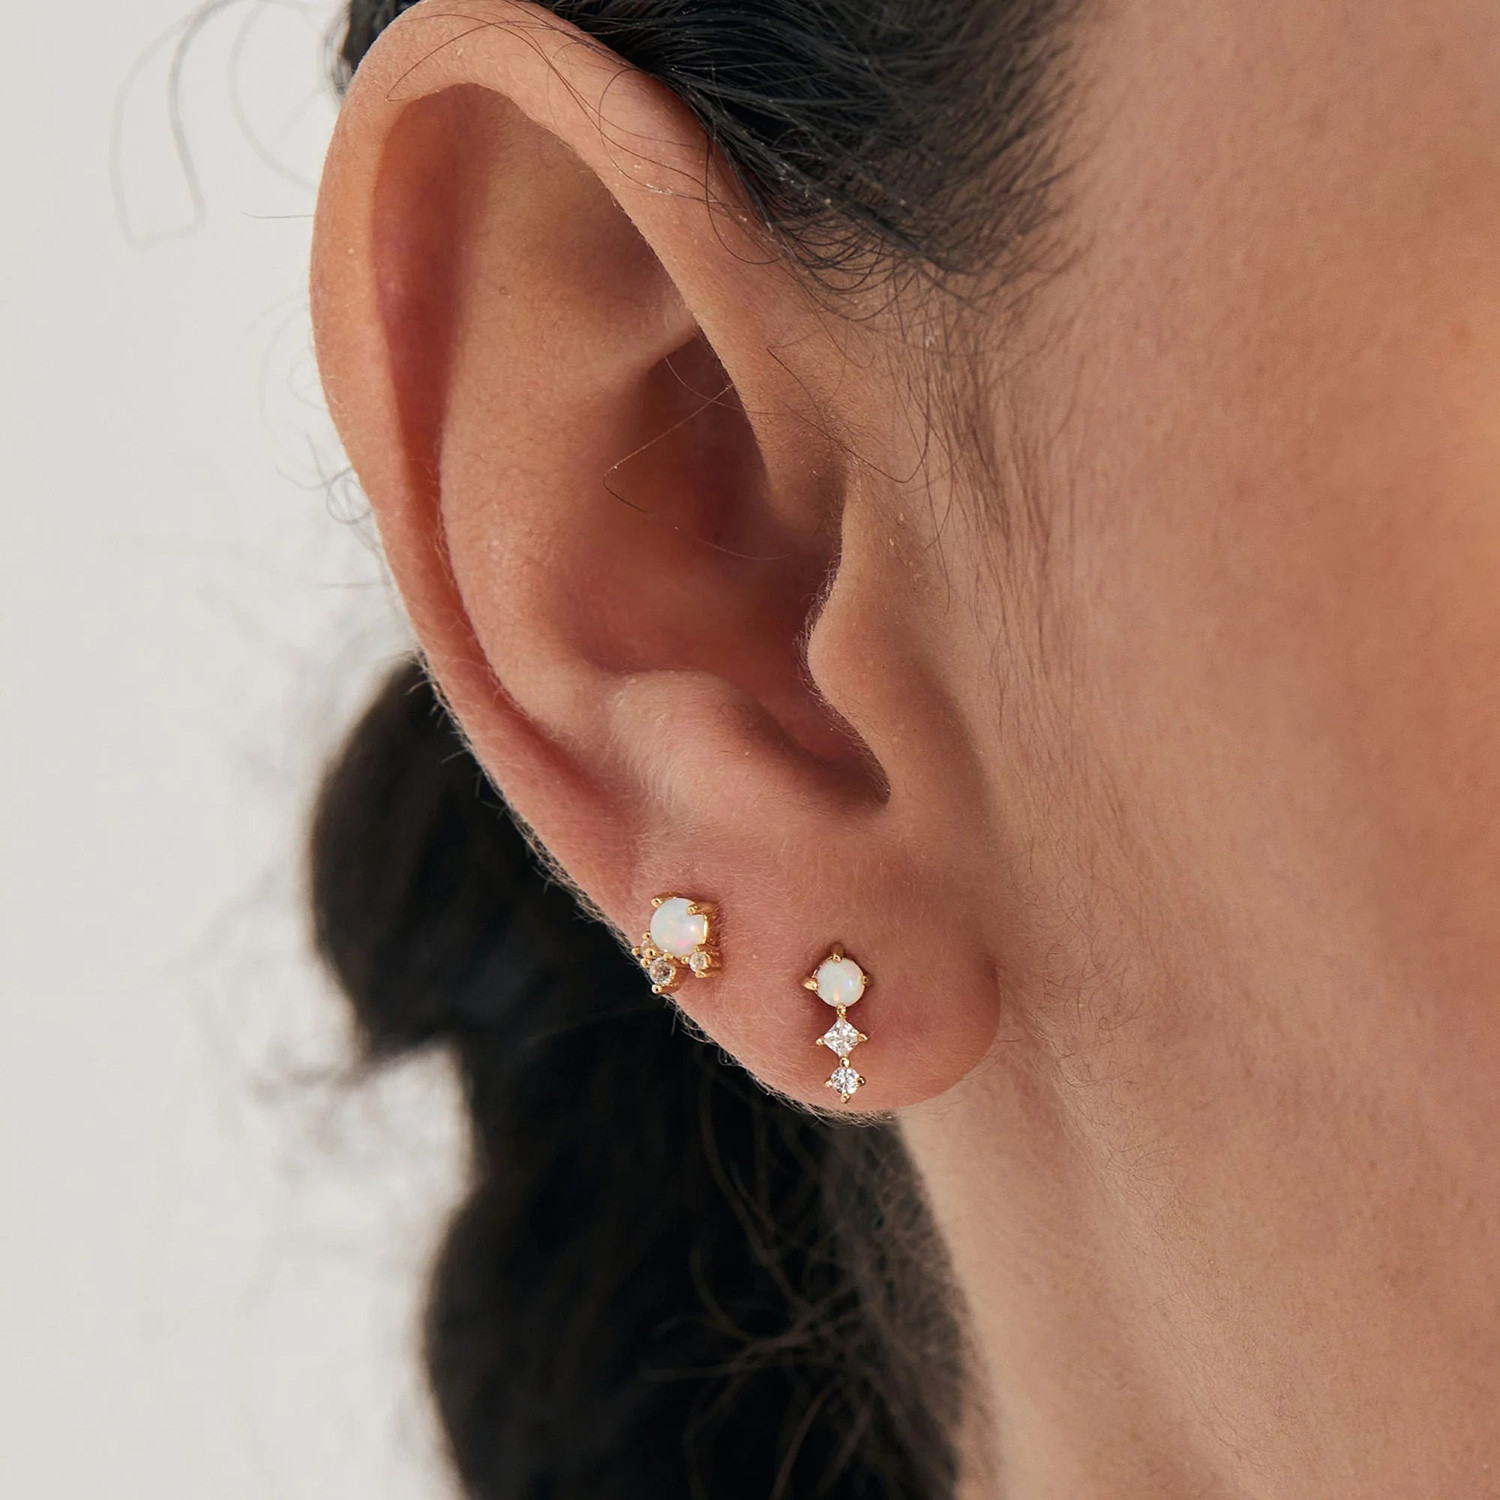 Boucle d'oreille individuelle Ania Haie Kyoto Pearl
Crown dorée